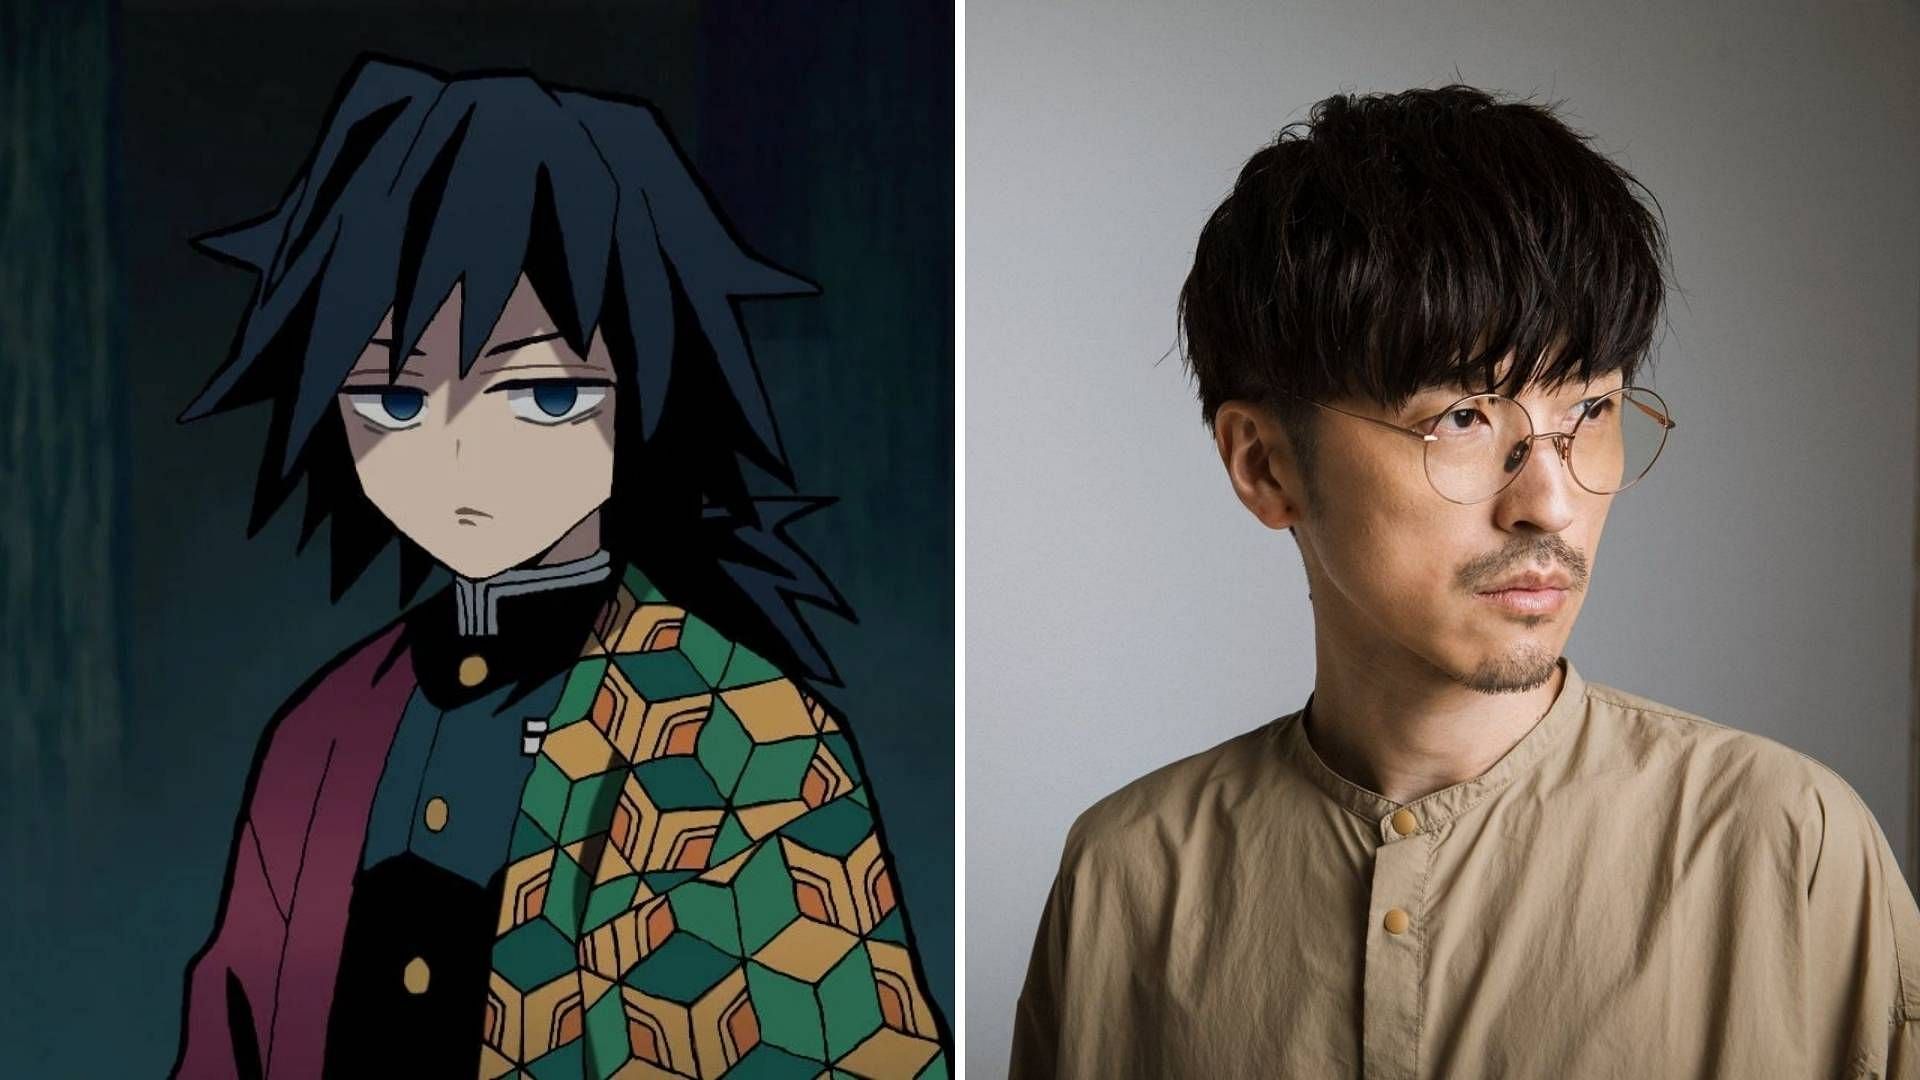 Shocking news from voice actor Takahiro Sakurai shakes anime community